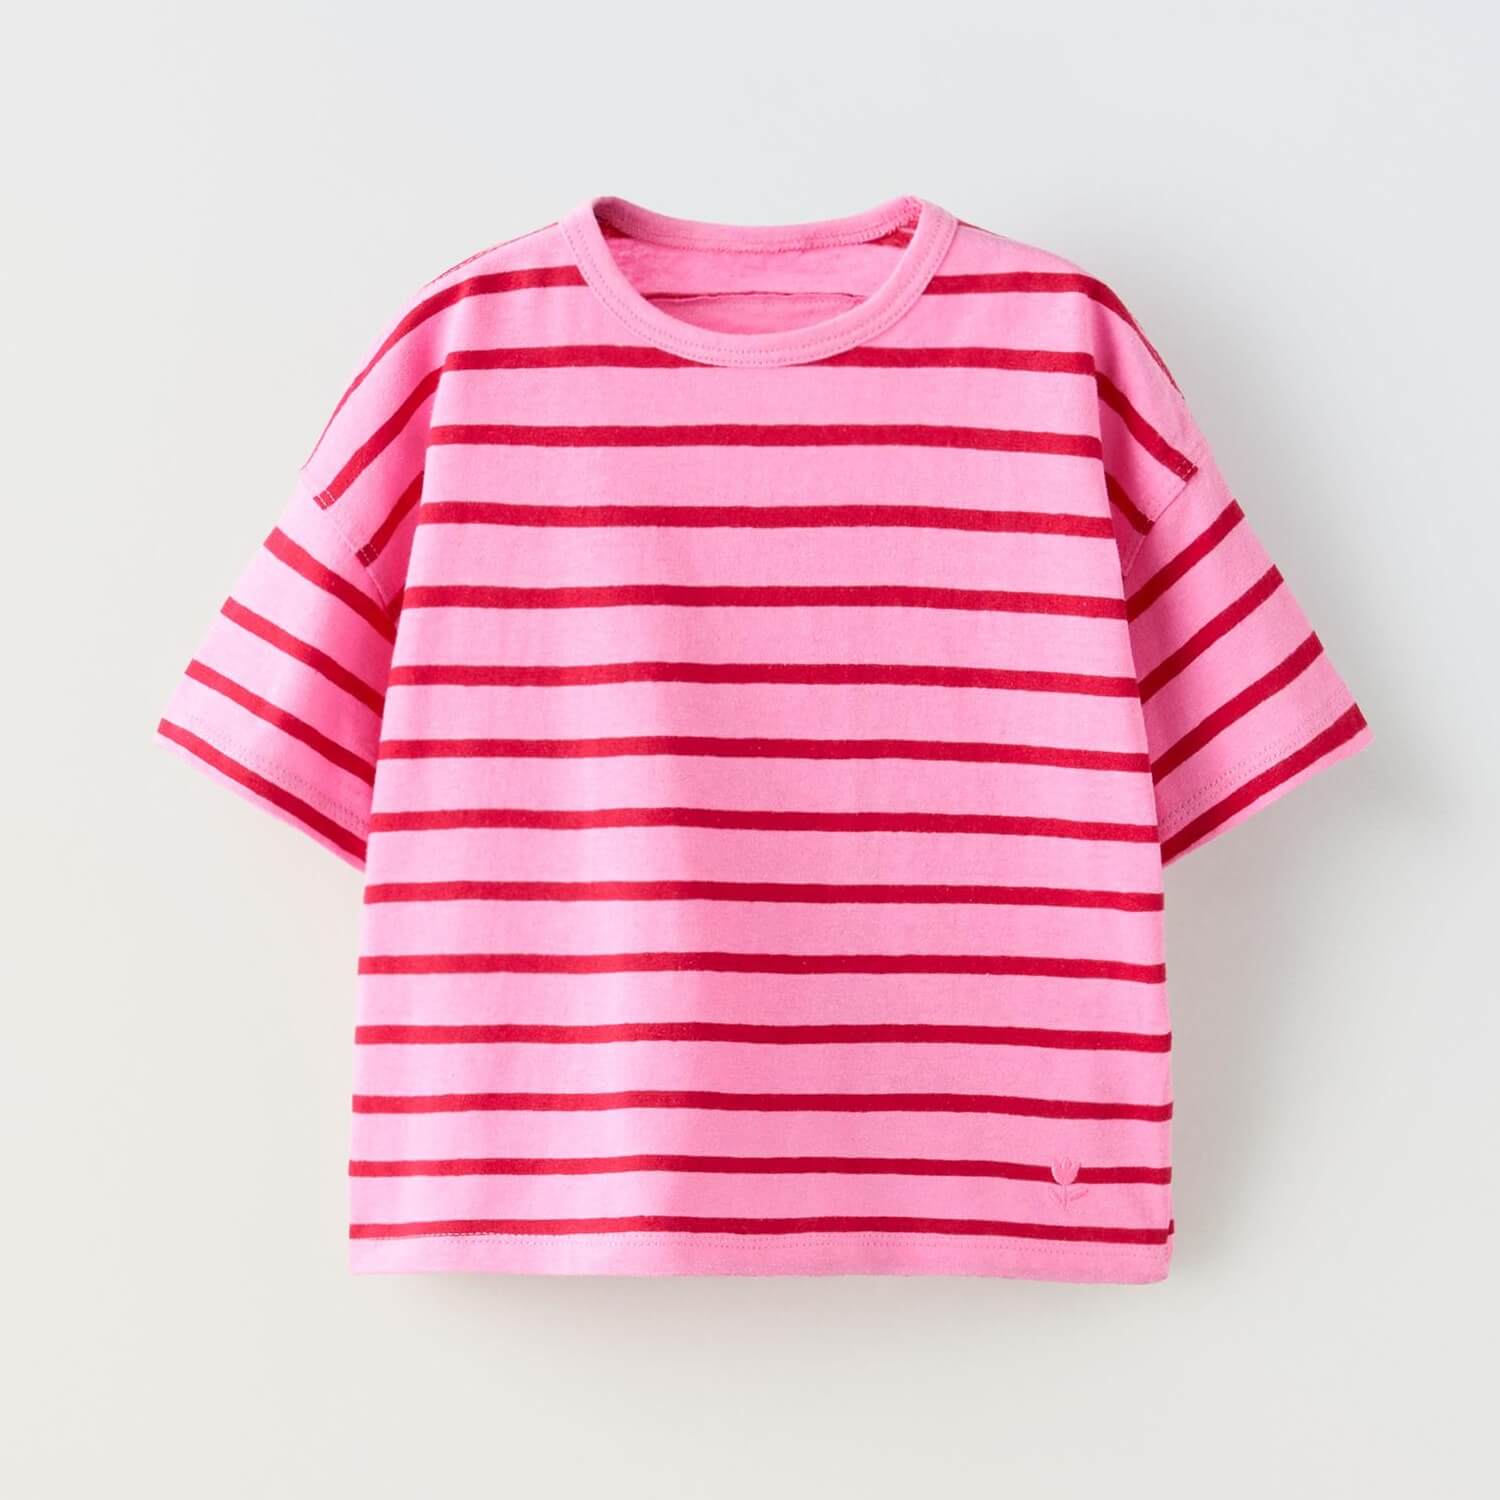 Футболка Zara Woven Striped With Embroidery, темно-розовый рубашка zara striped with embroidery голубой белый